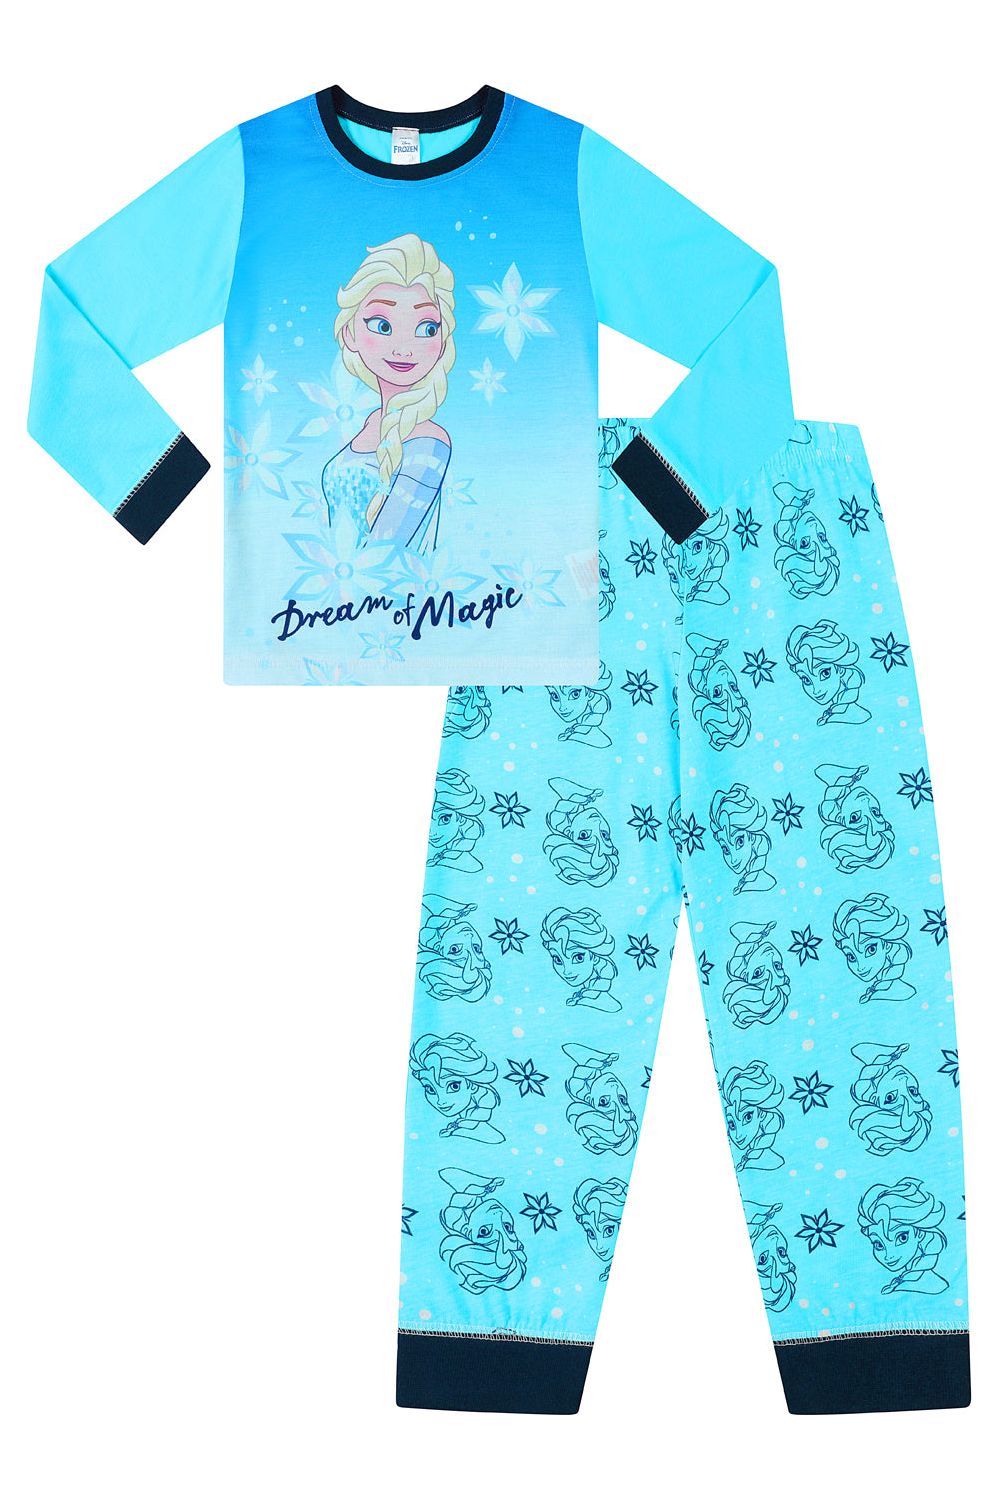 Disney Frozen 2 Elsa Pyjamas  Dream Of Magic - Pyjamas.com